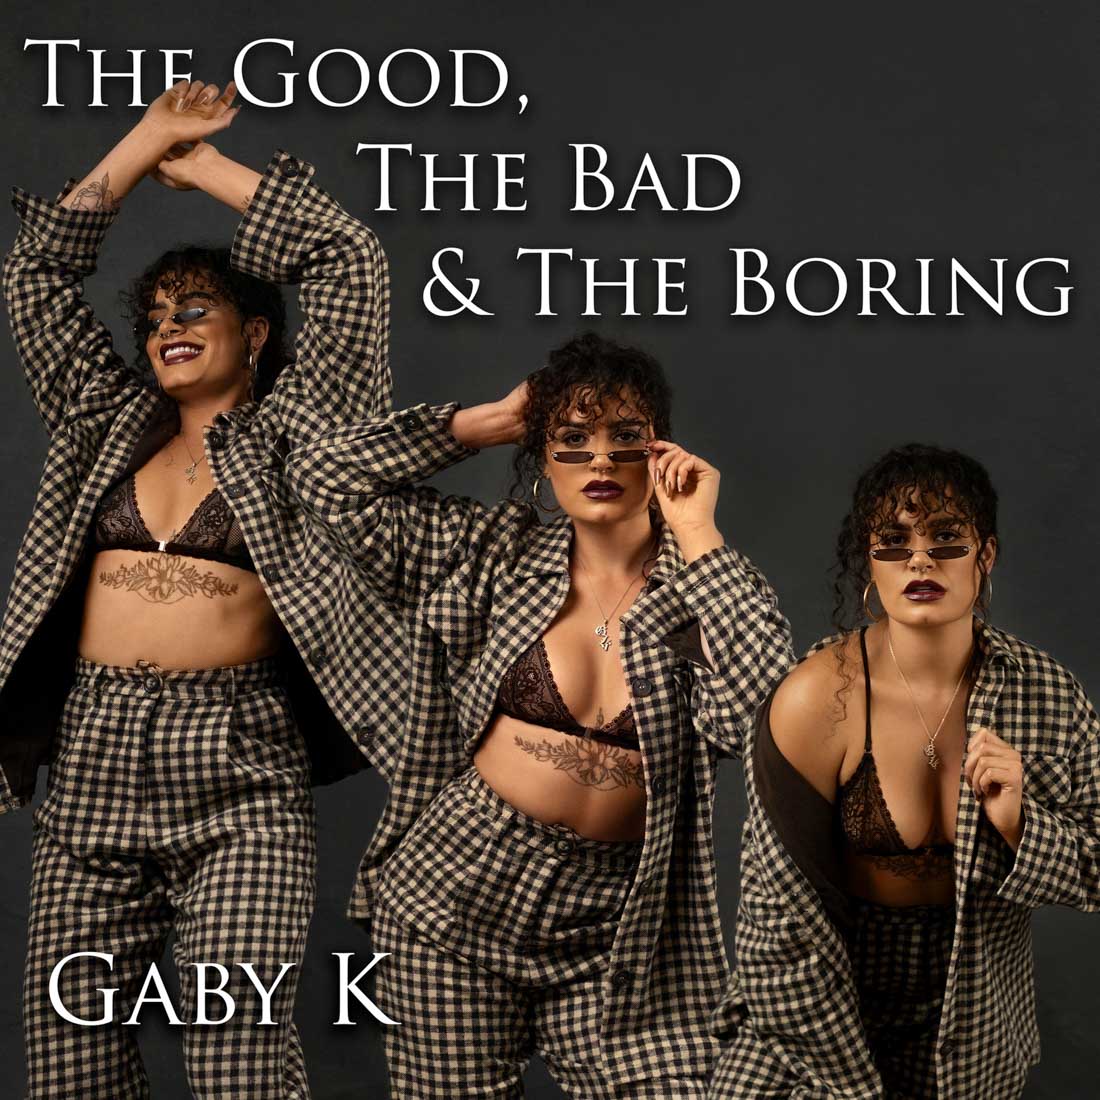 Gaby K music album cover, created by Anastasia Jobson